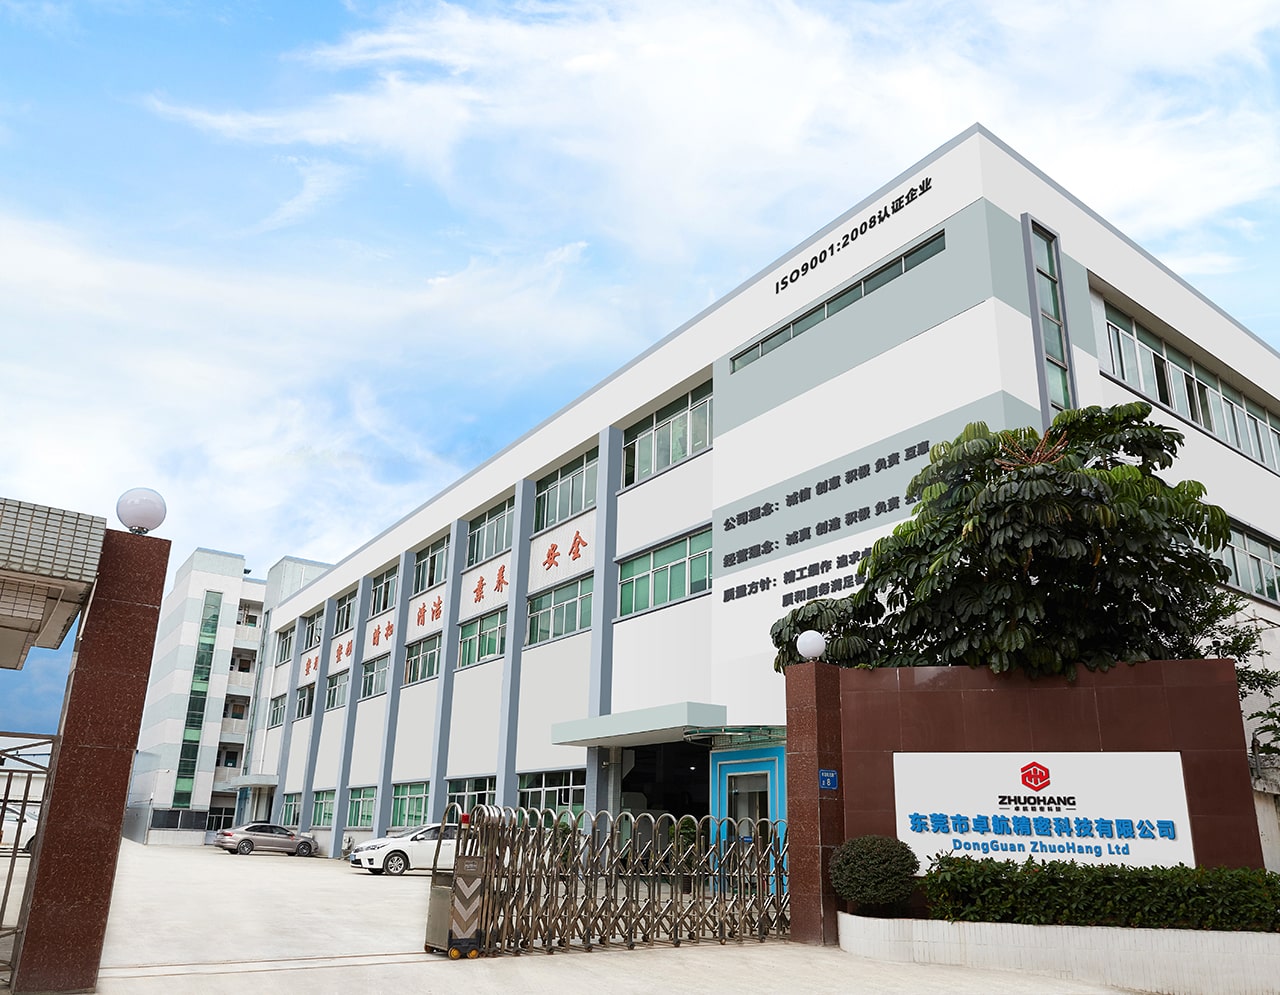 CNC Milling Factory,oem manufacturer,supplier,venor,exporter of cnc machined parts